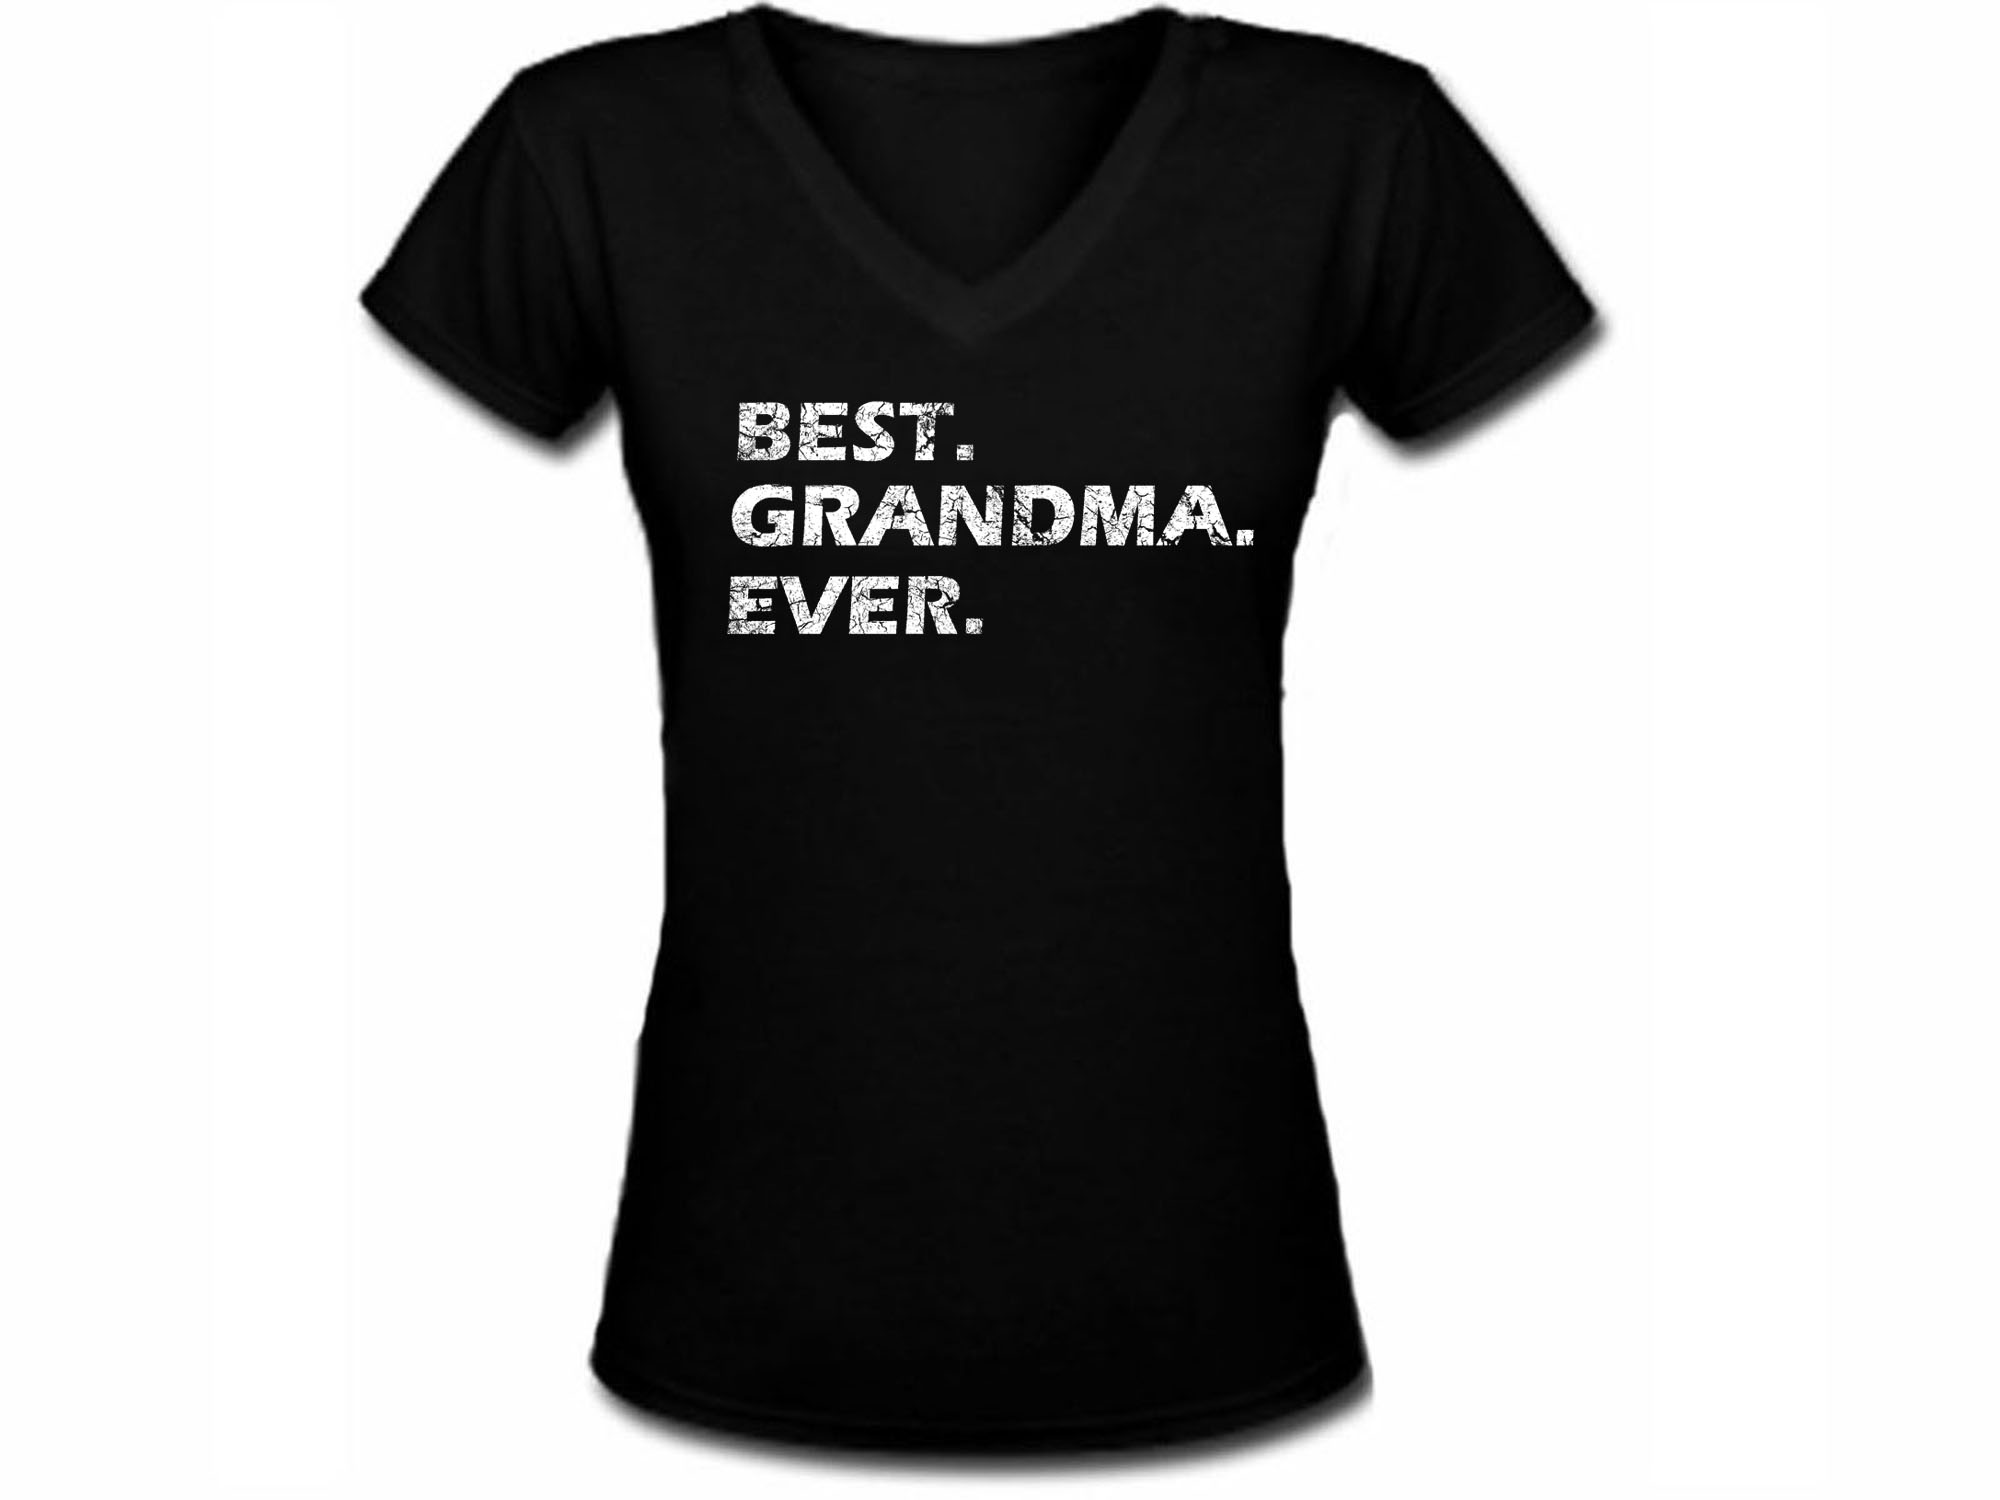 Best grandma ever women v neck black top shirt